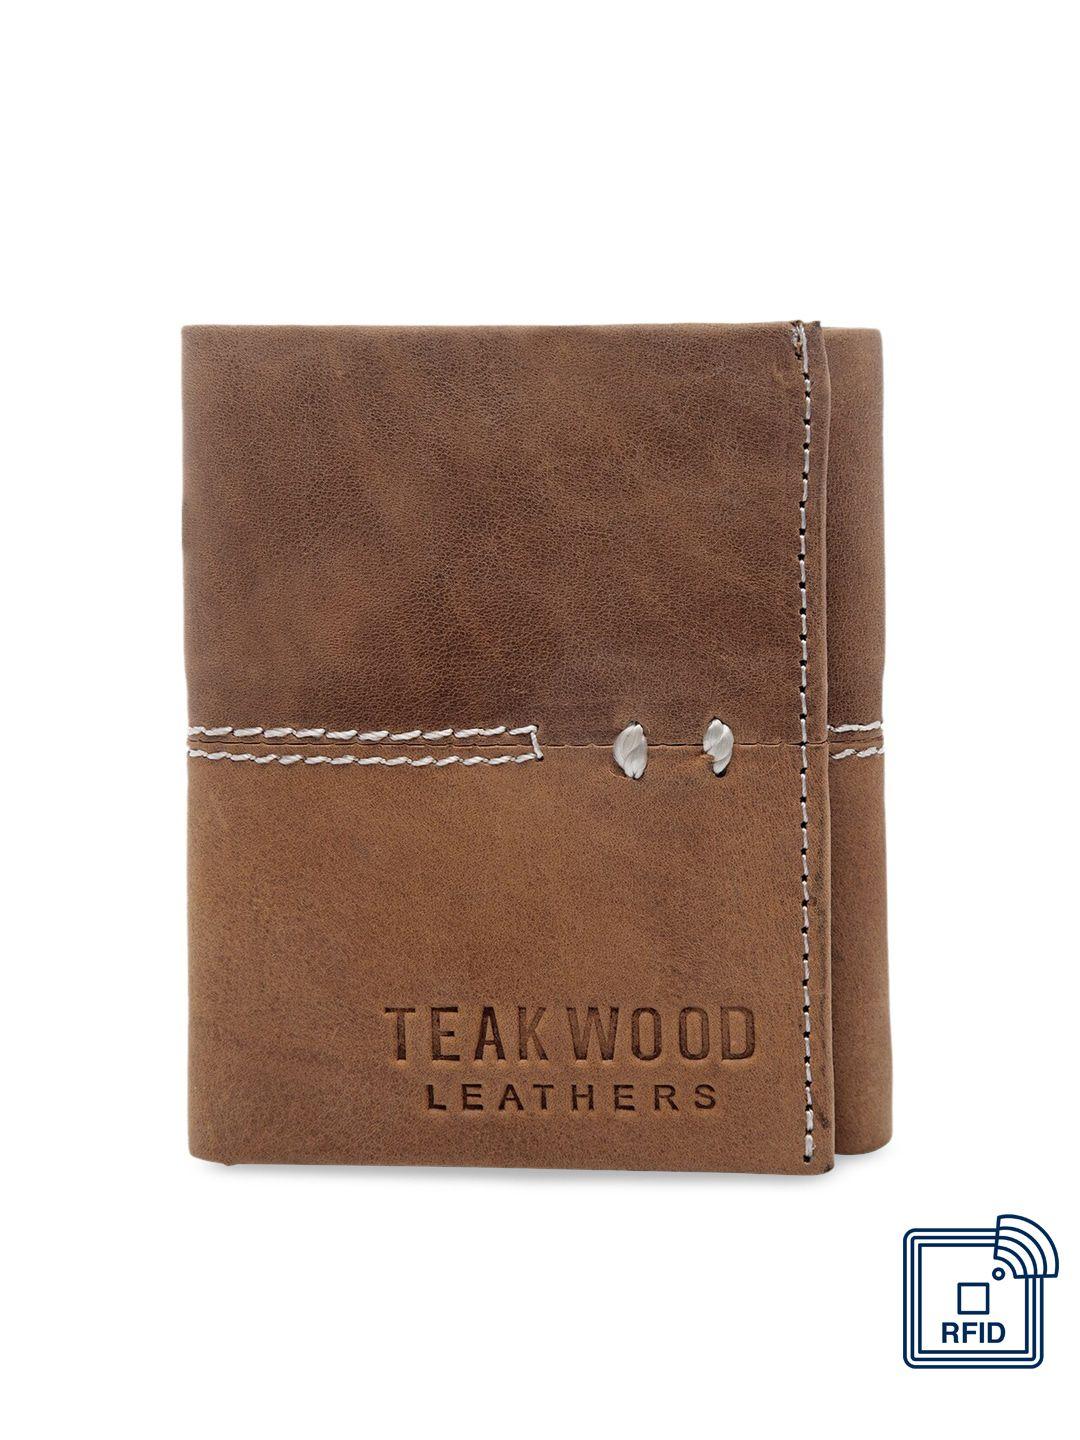 teakwood leathers men tan brown solid leather three fold wallet